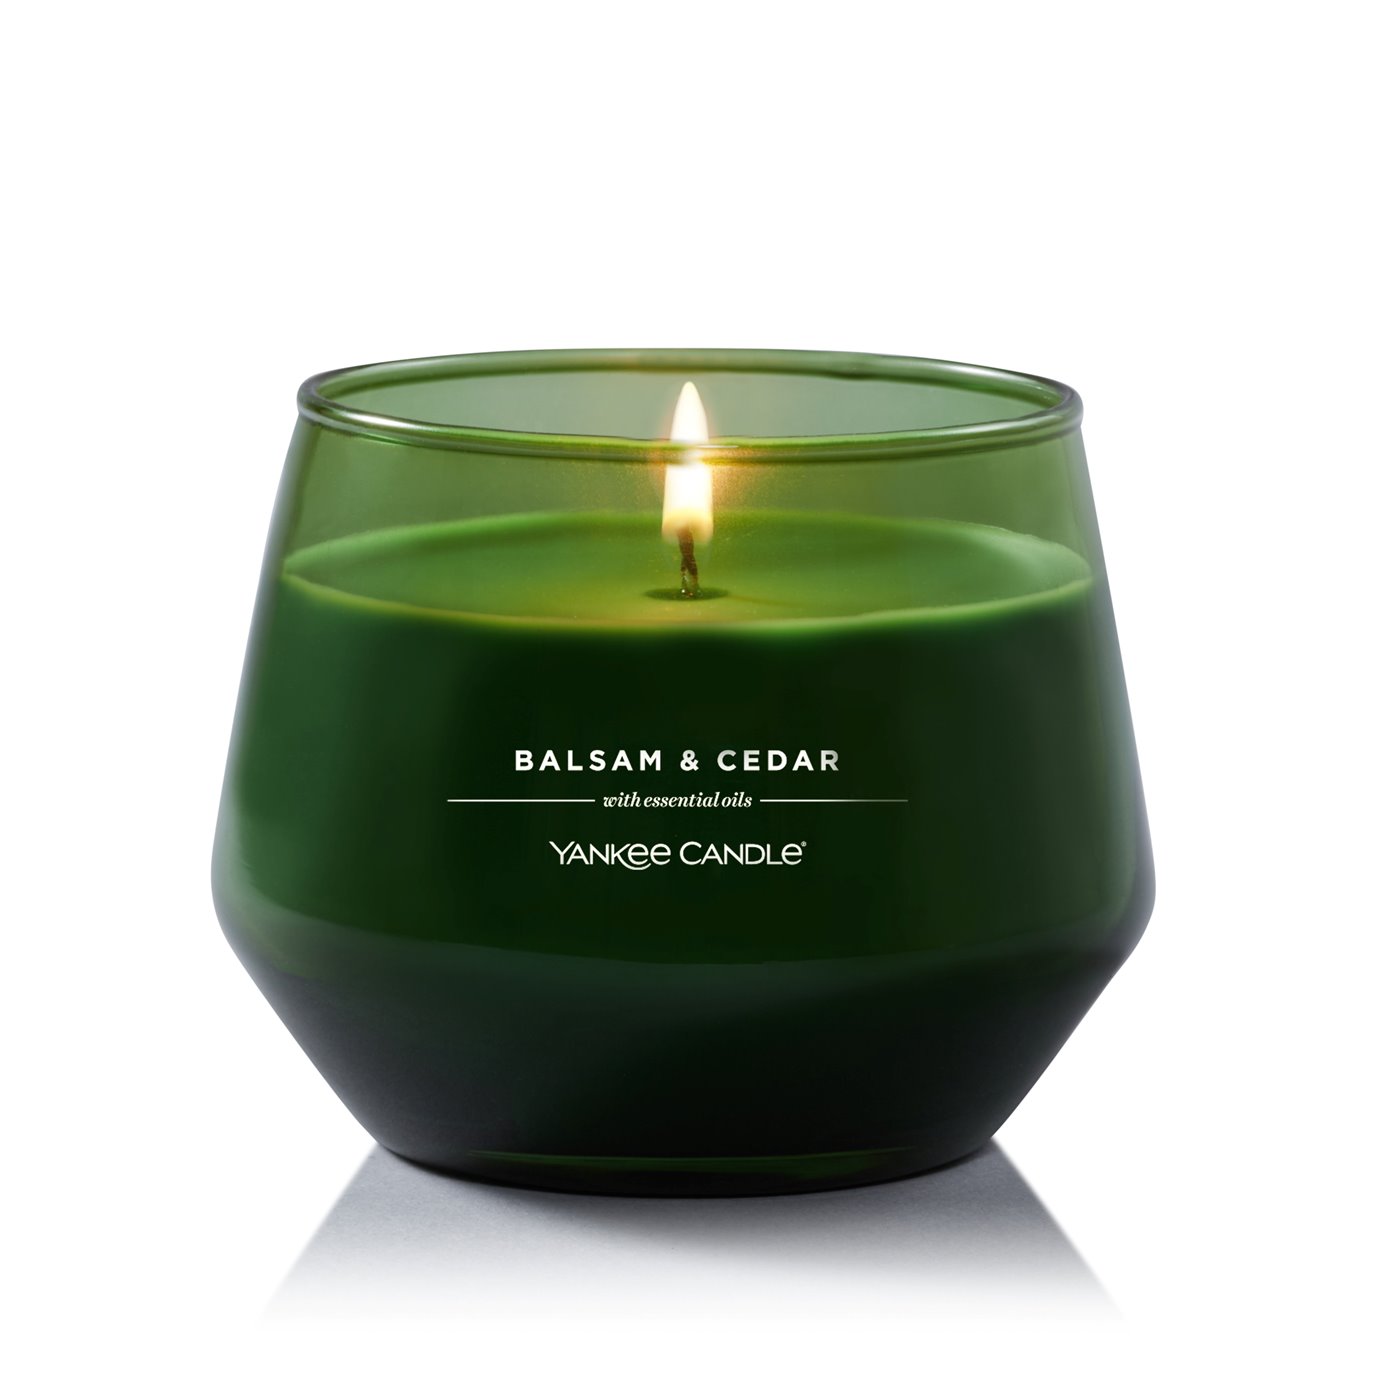 Yankee Candle Balsam & Cedar Studio Collection Candle - 10oz